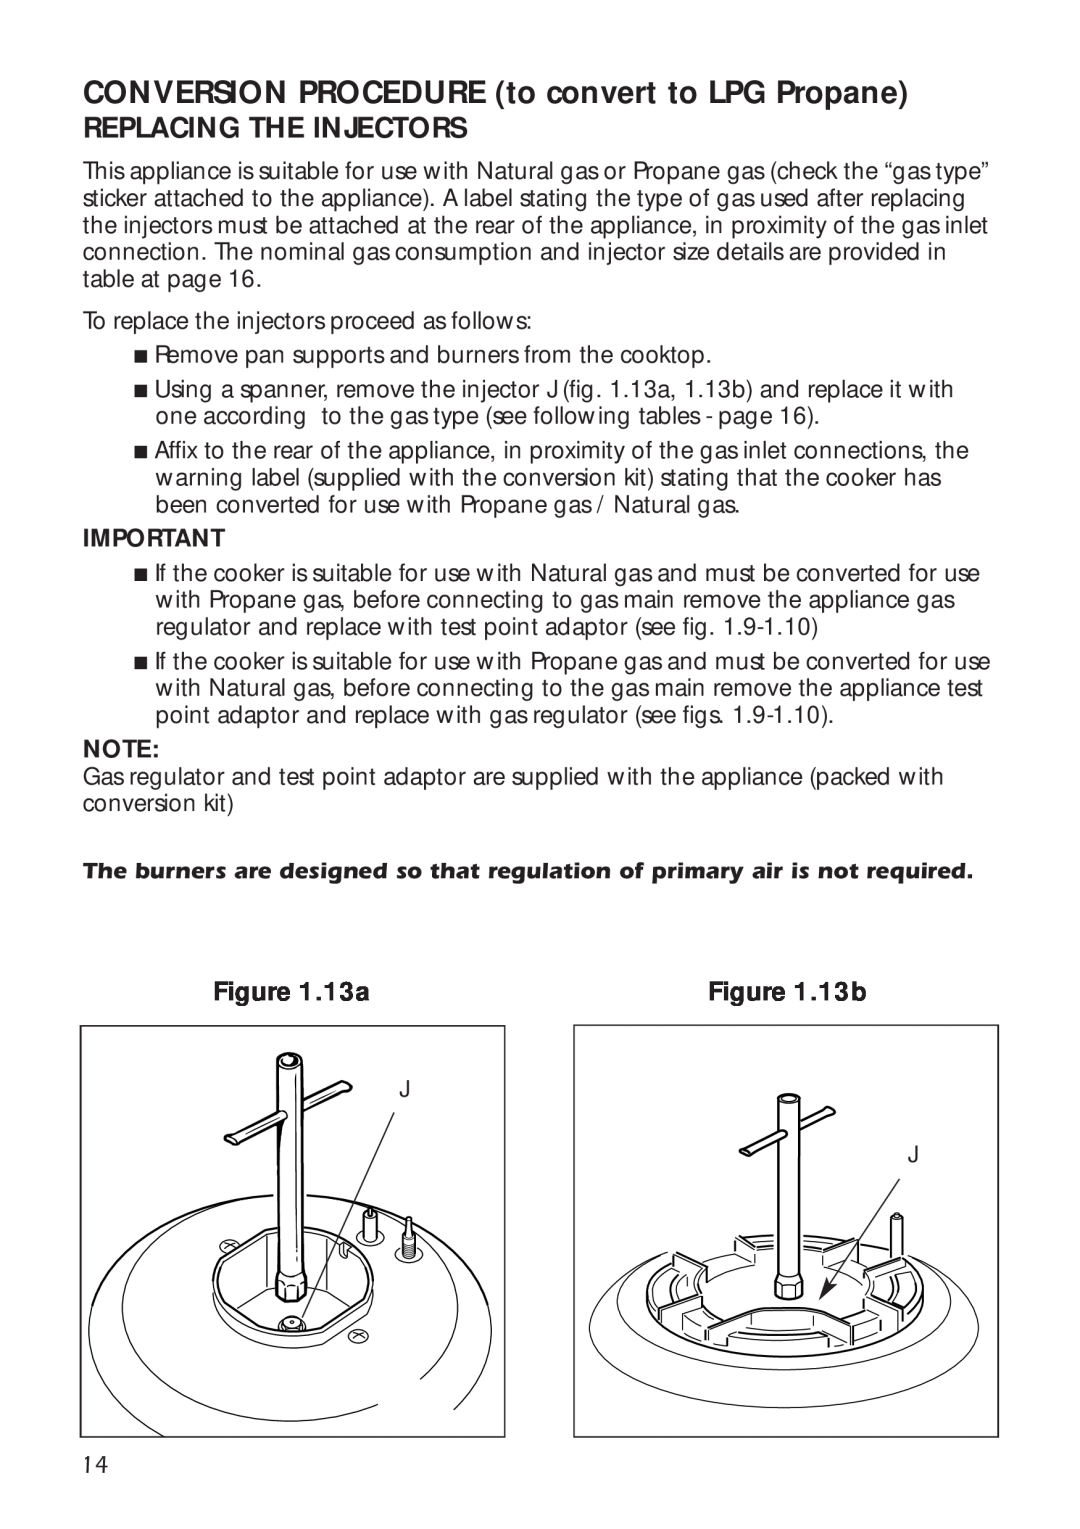 DeLonghi A 1346 G manual CONVERSION PROCEDURE to convert to LPG Propane, Replacing The Injectors 